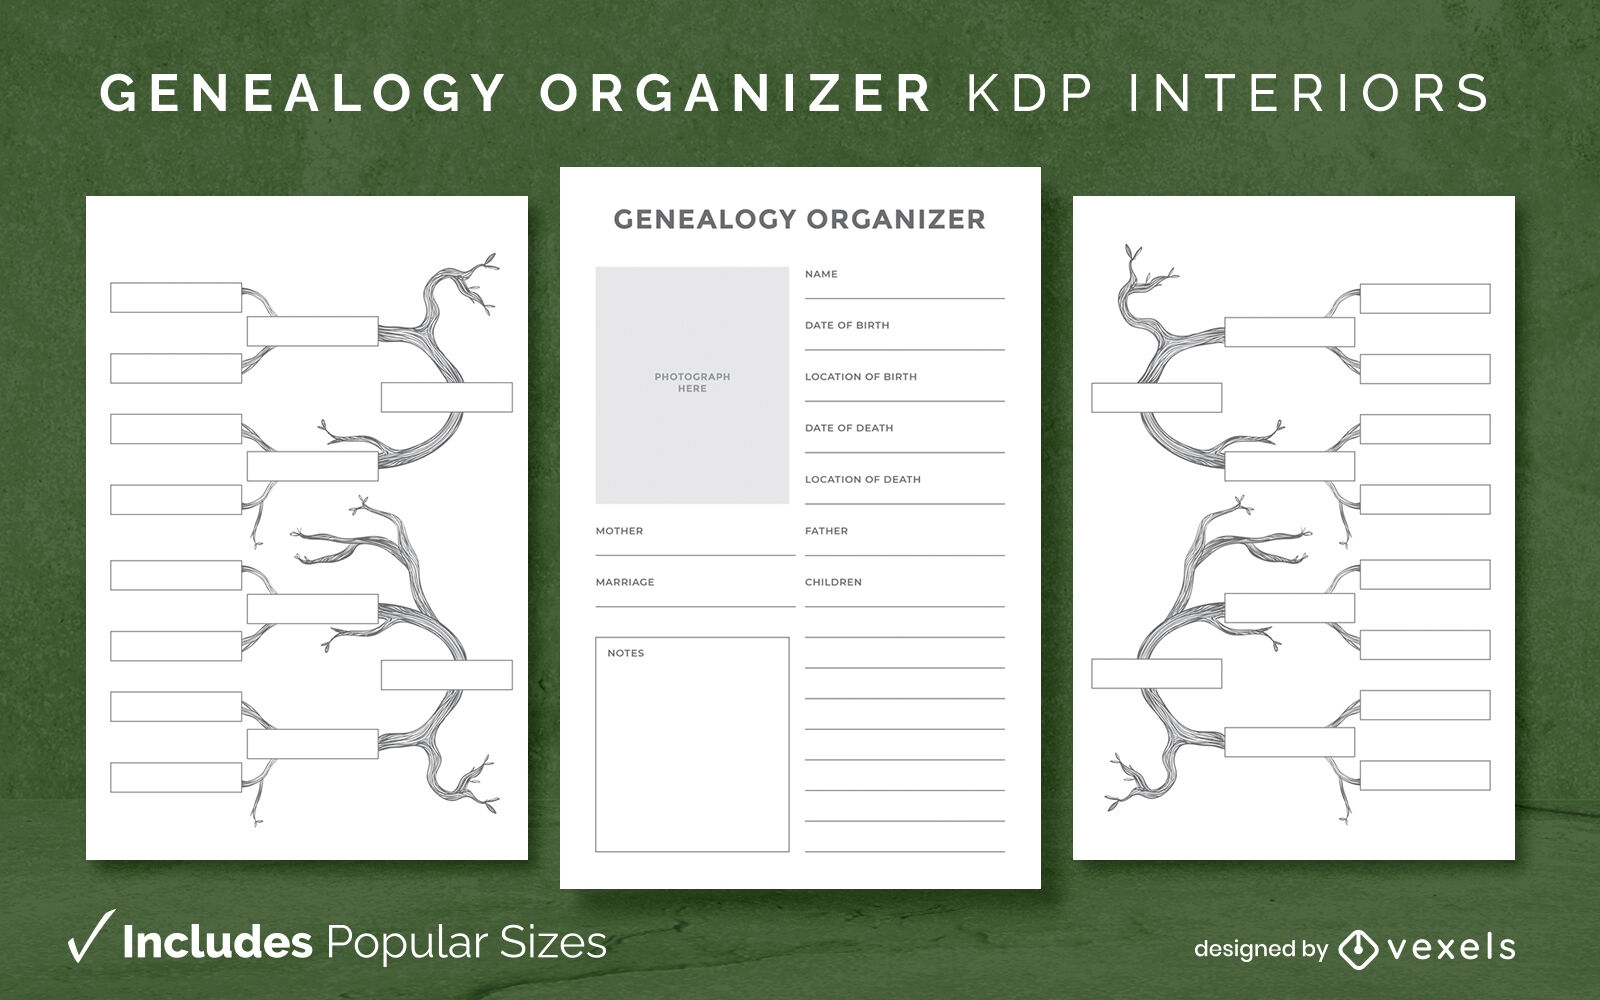 Genealogy organizer kdp interior template design